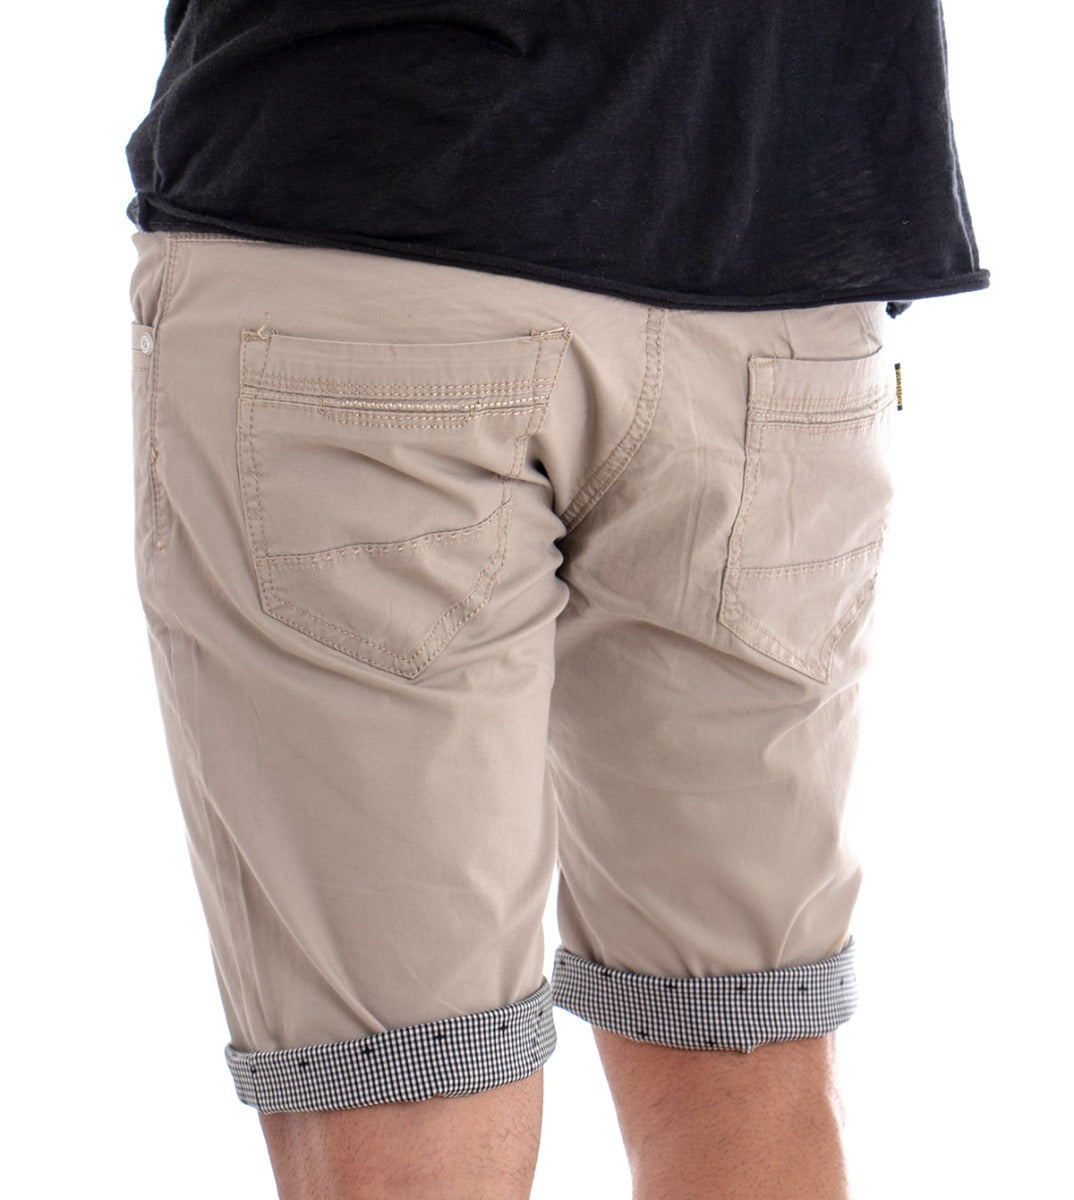 Bermuda Short Men's Shorts Cotton Solid Beige Five Slim Pockets GIOSAL-PC1283A